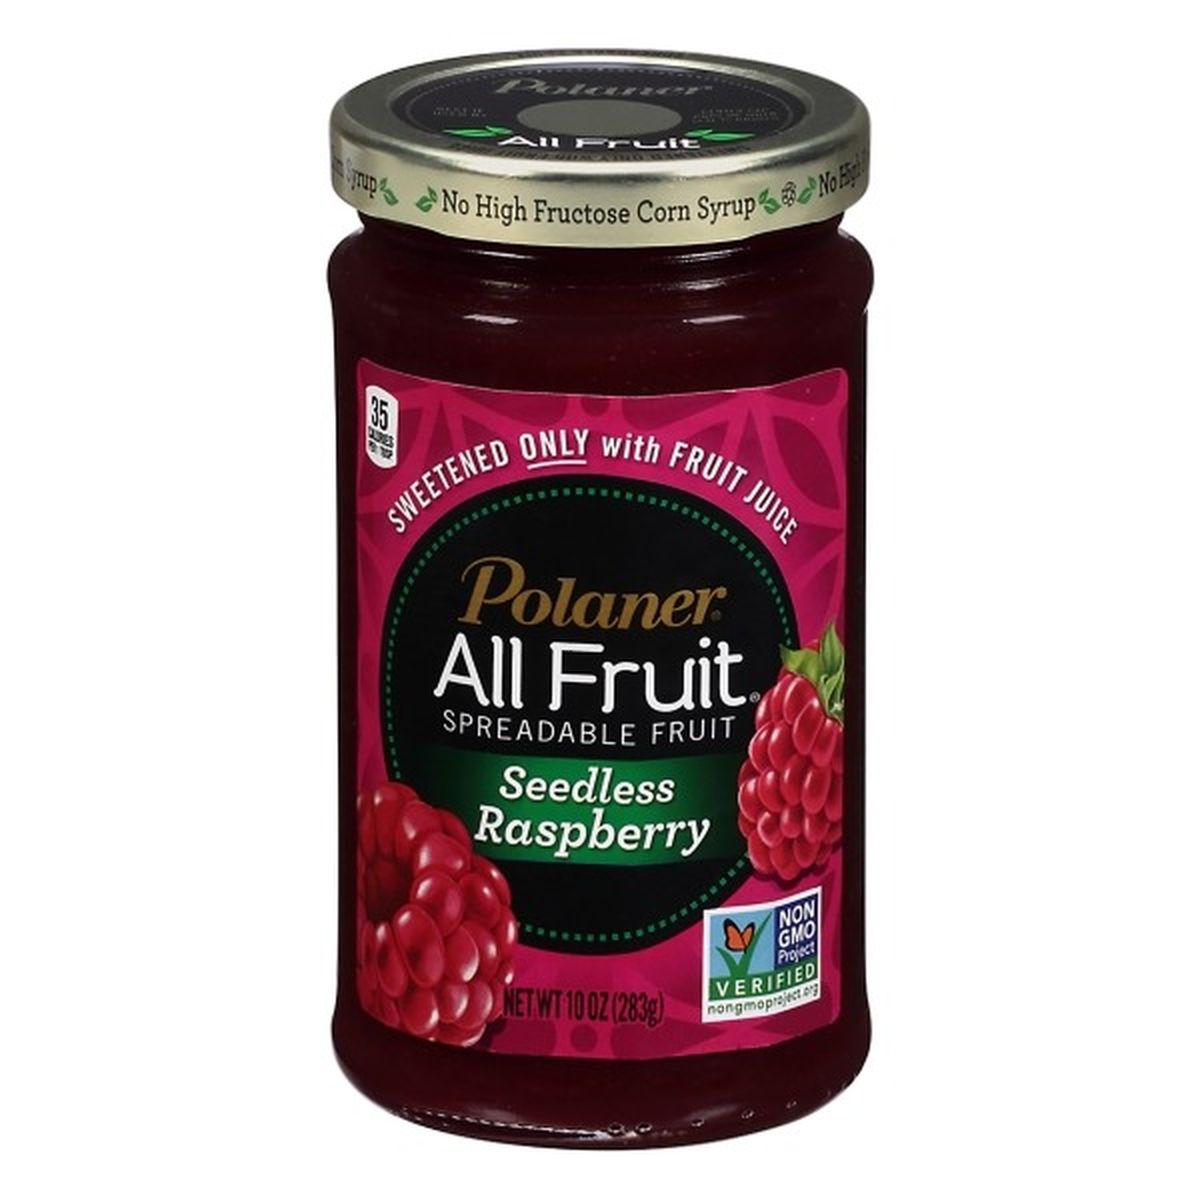 Calories in Polaner All Fruit Spreadable Fruit, Seedless Raspberry